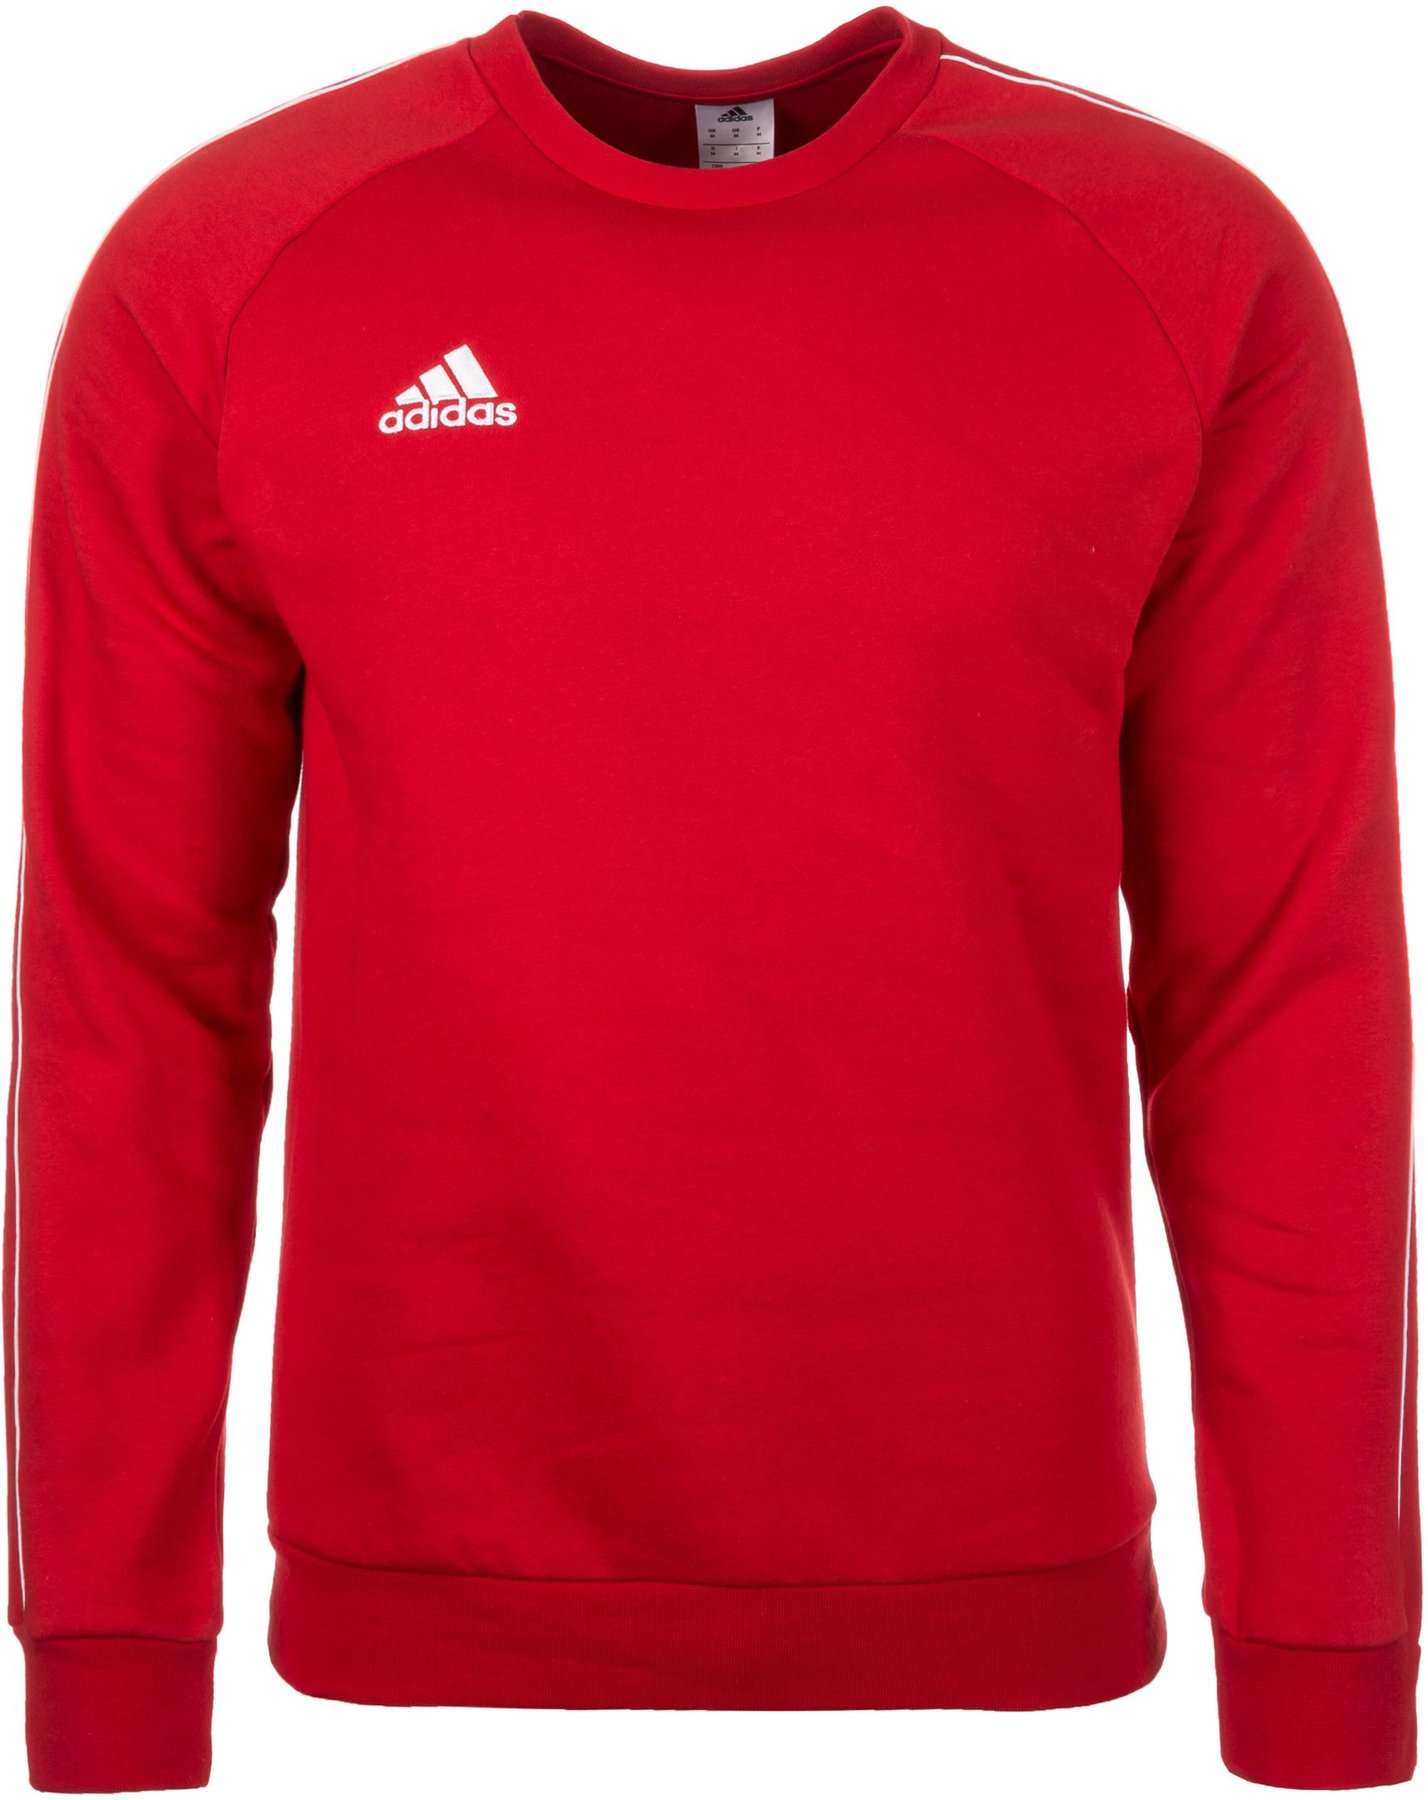 Adidas sweatshirt HERREN Pullovers & Sweatshirts Basisch Rot/Dunkelblau S Rabatt 64 % 